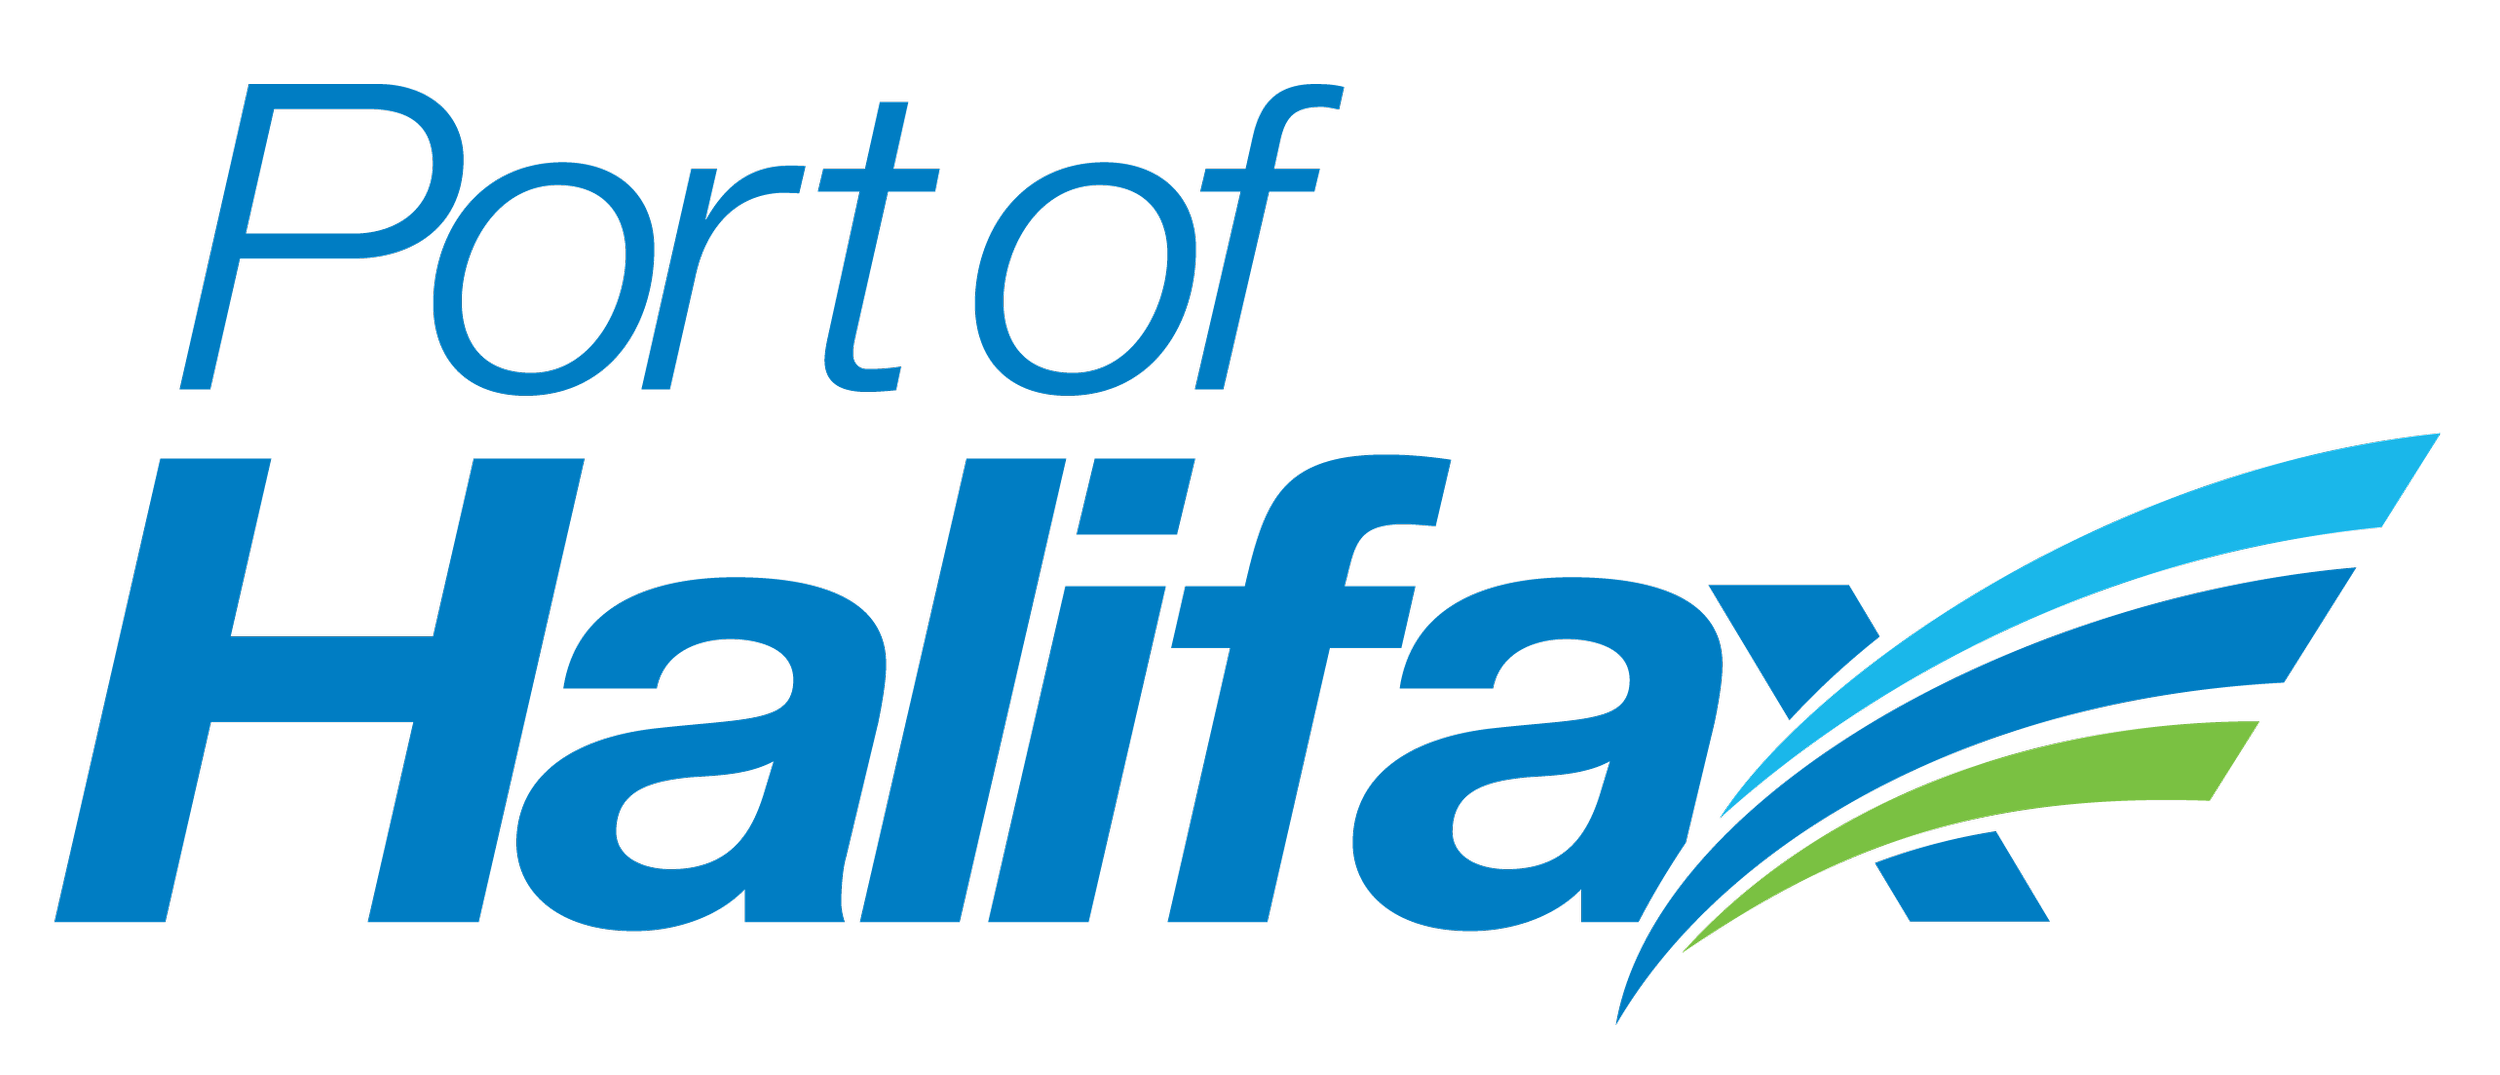 Halifax Port Logo.png